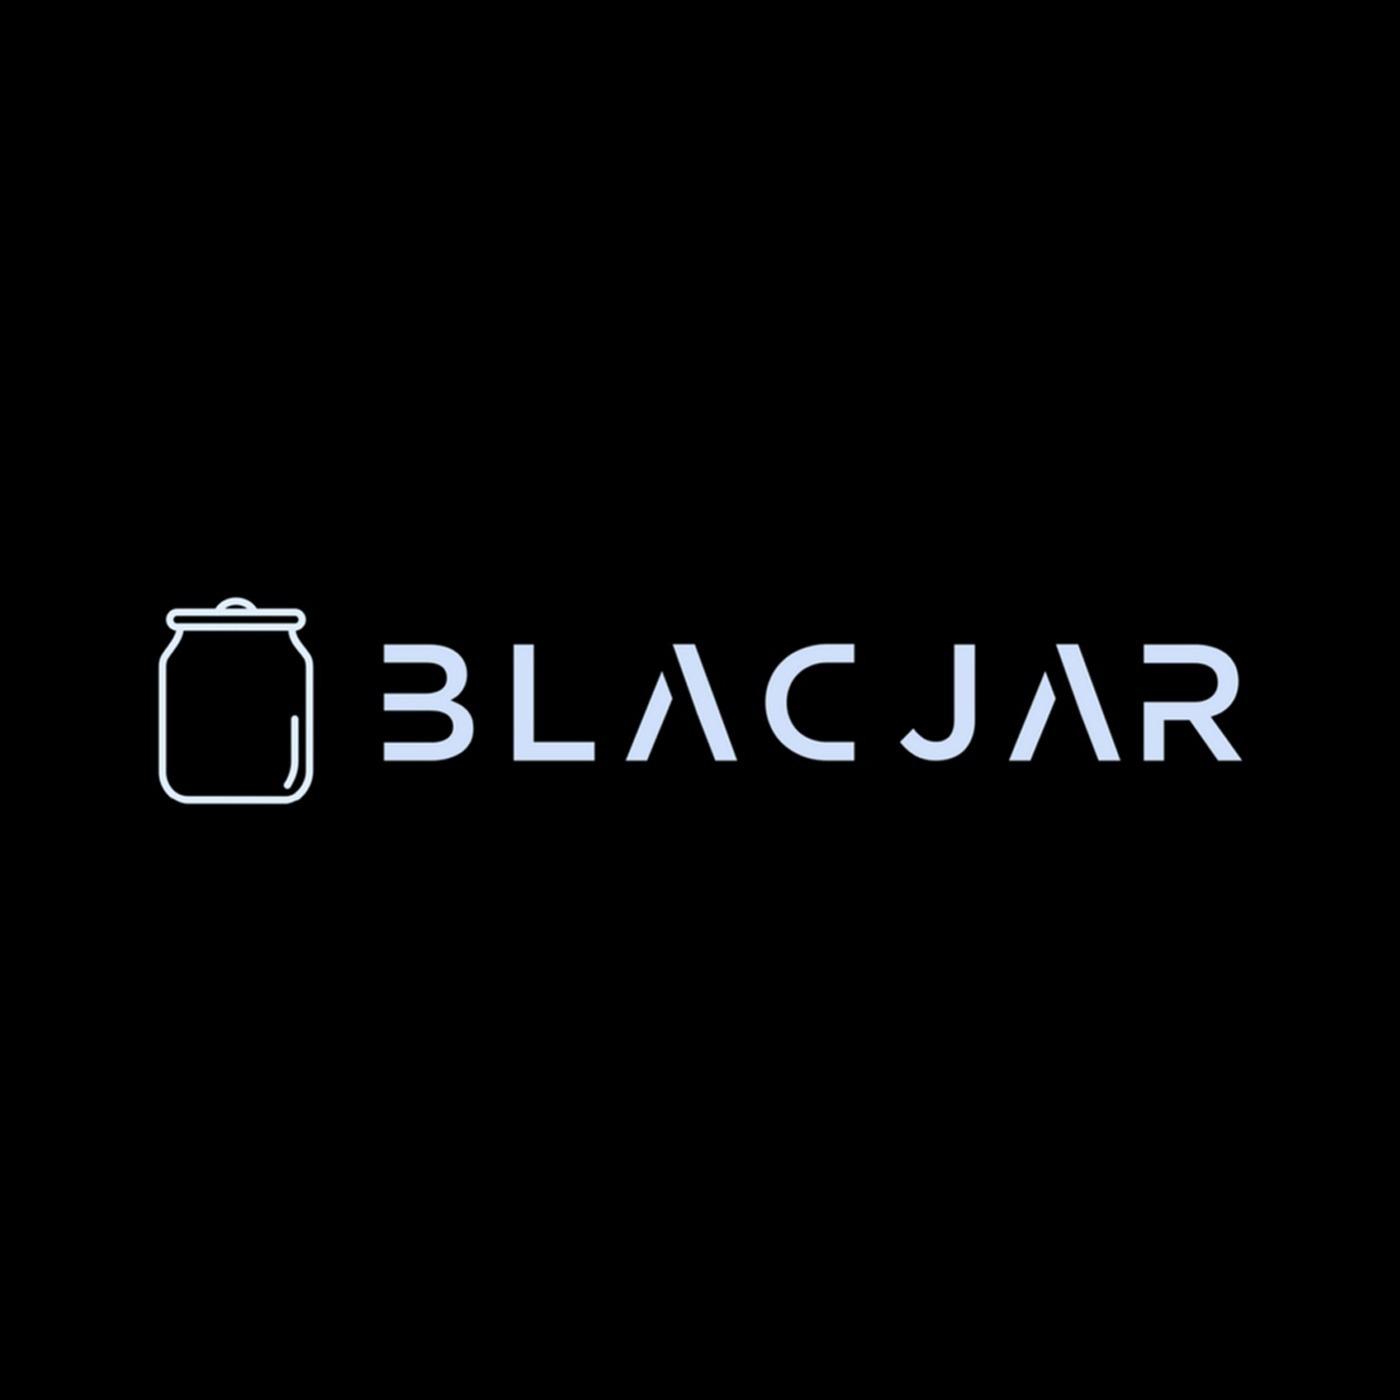 THE BLACJAR